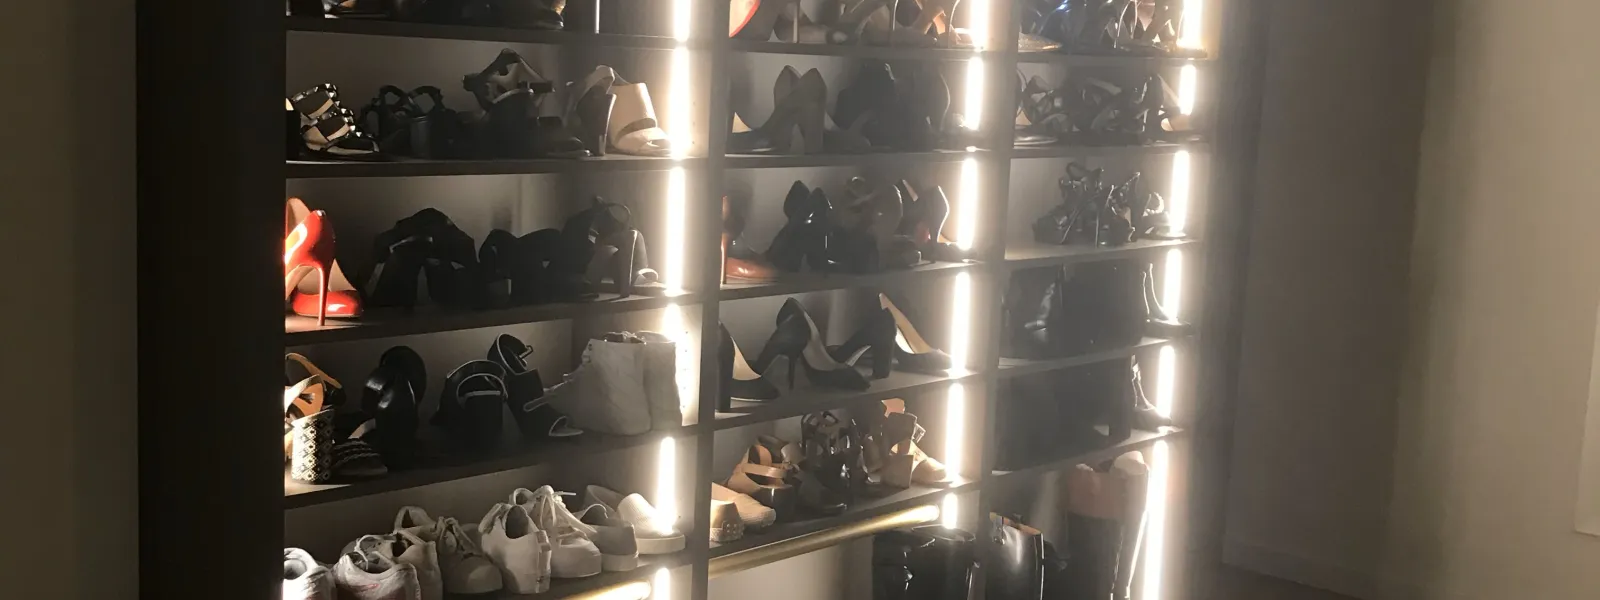 a closet full of shoes